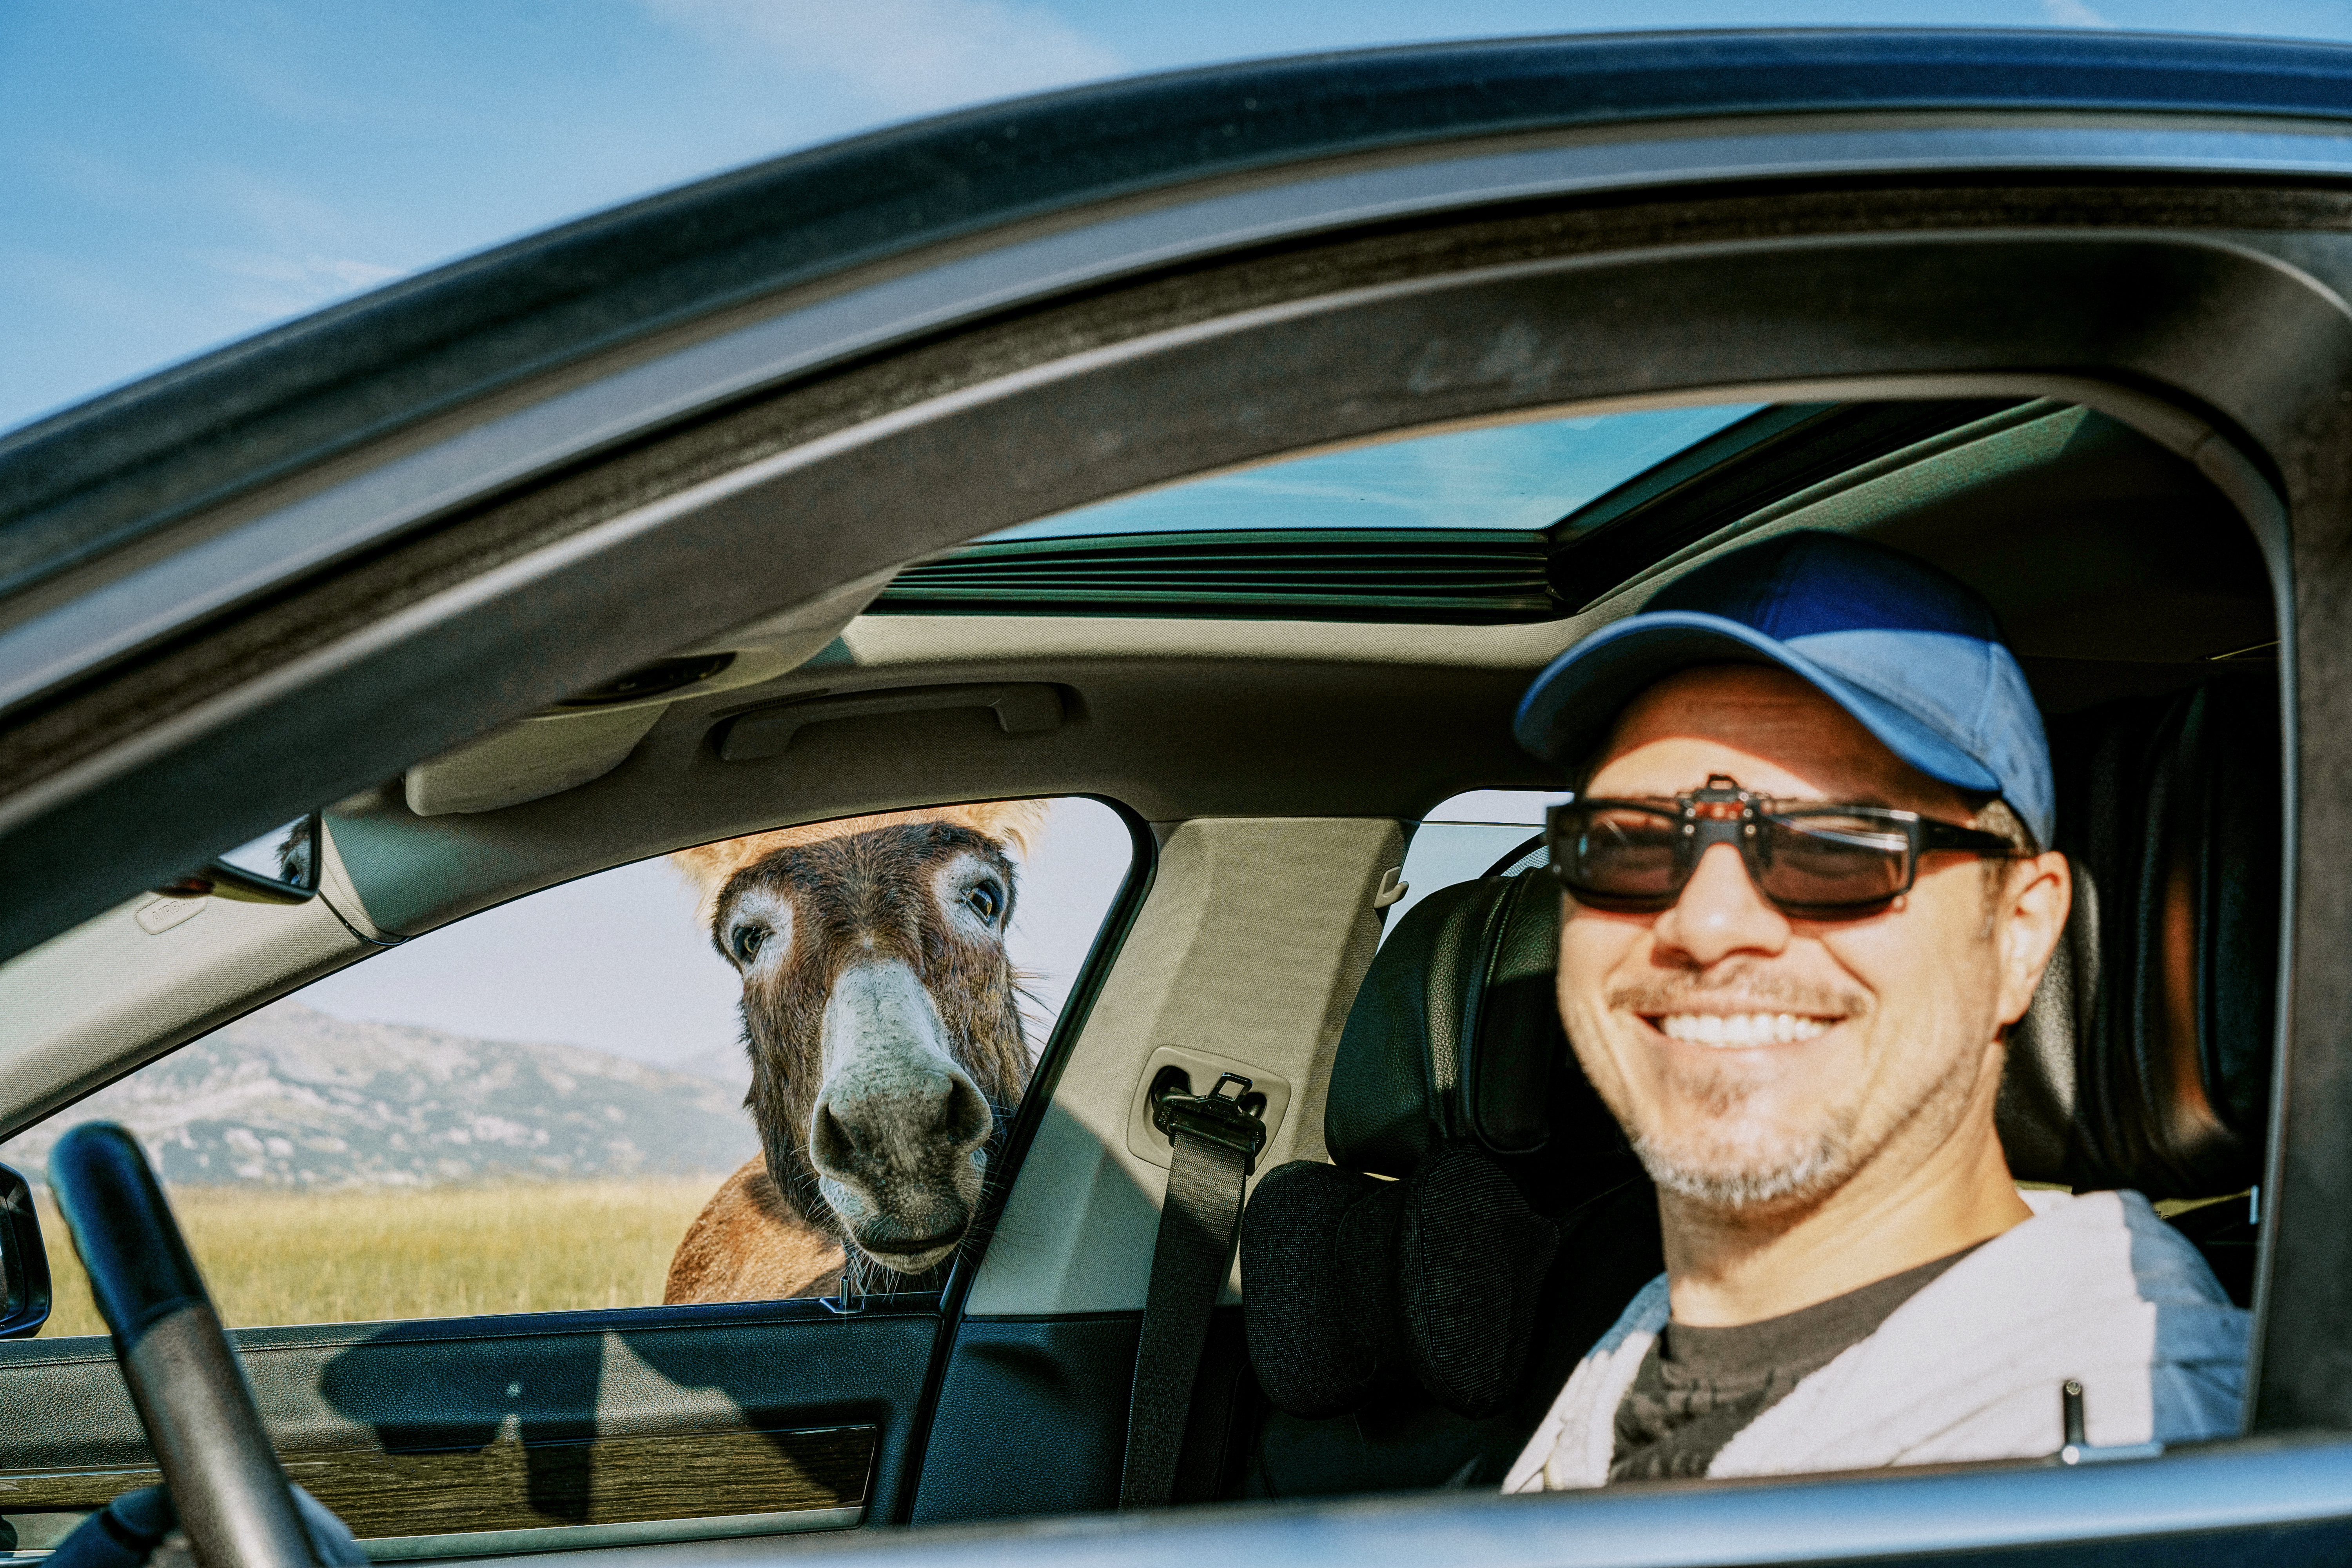 Man smiles at camera while donkey peers into car.